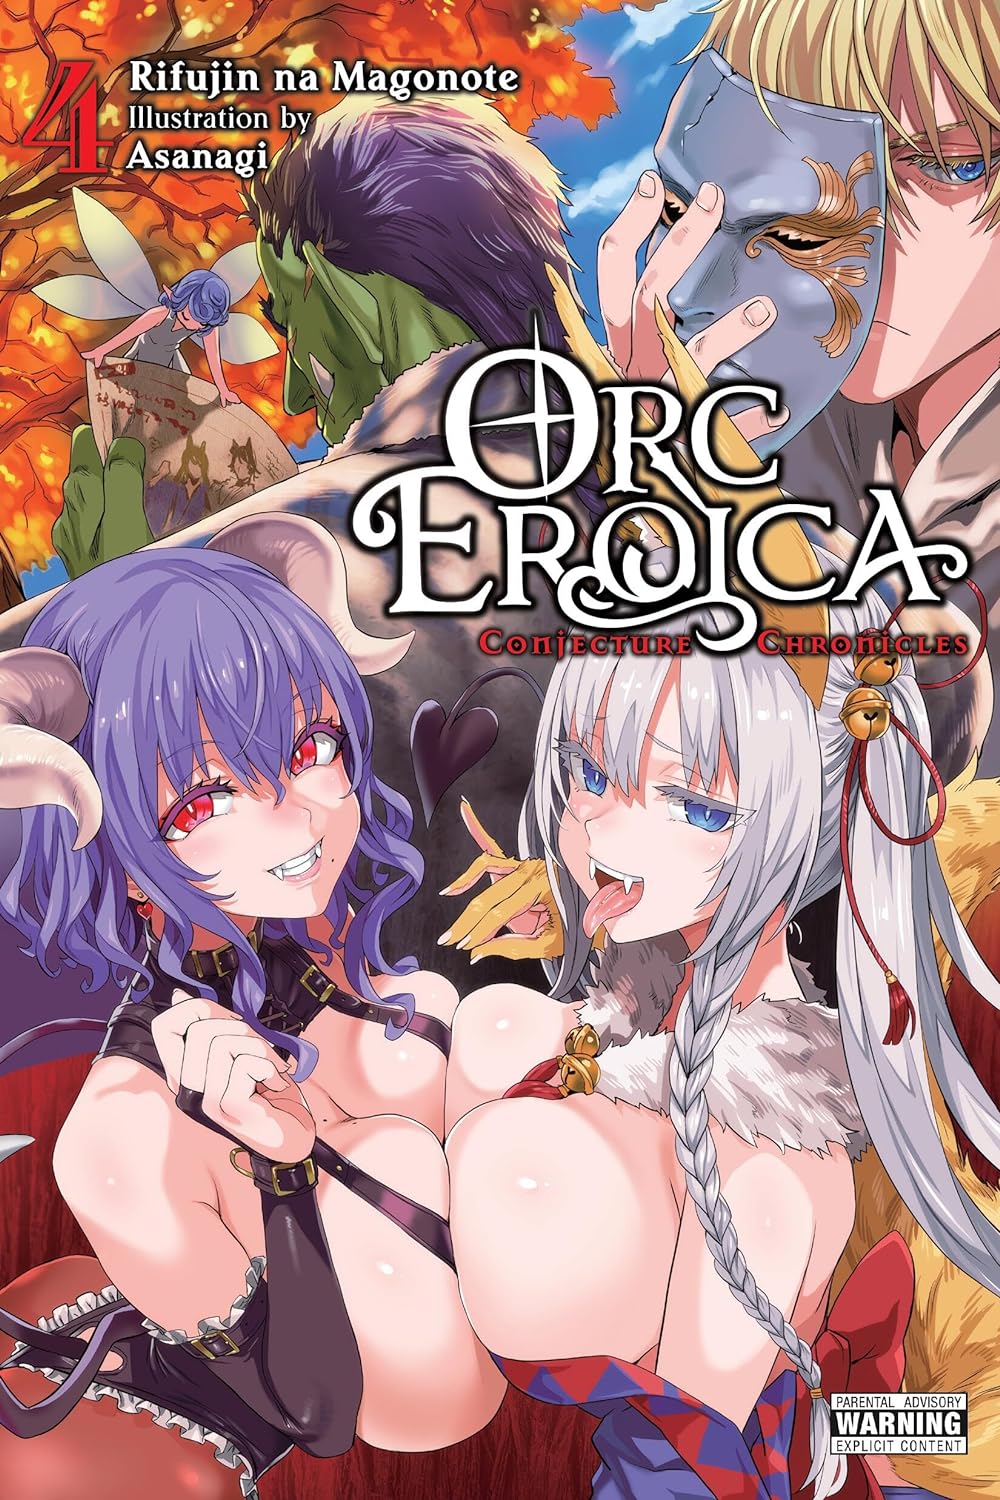 Orc Eroica Vol. 04 (Light Novel): Conjecture Chronicles